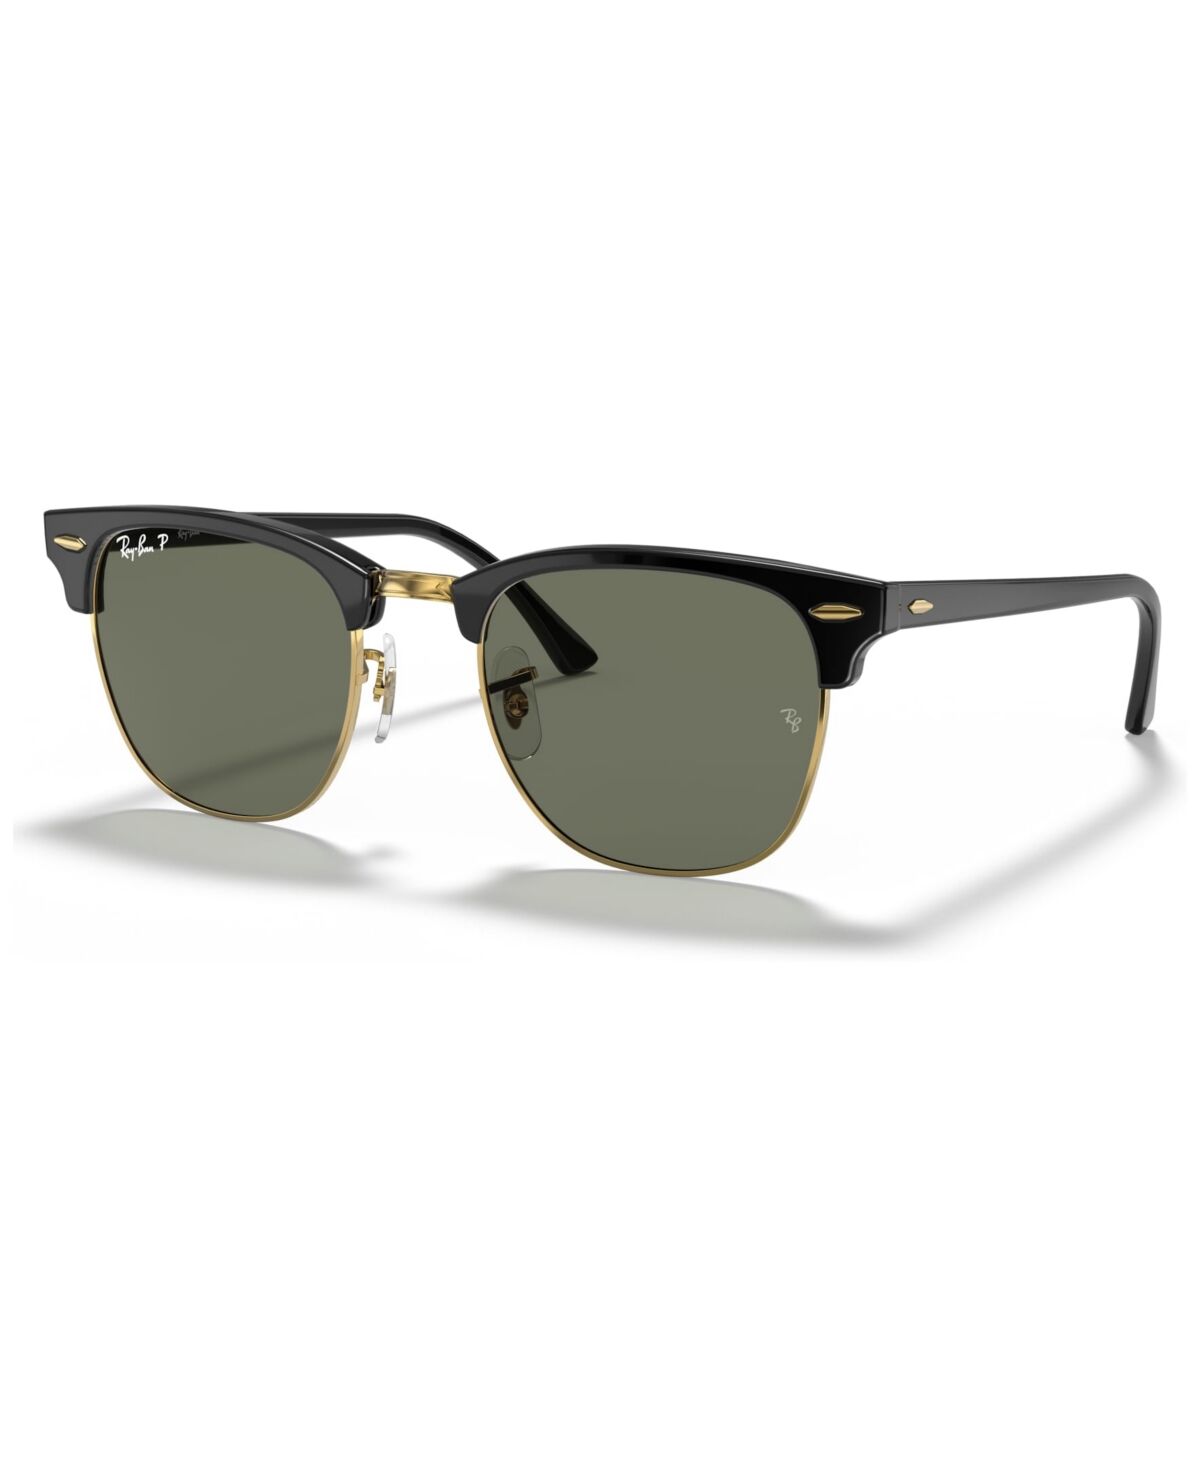 Ray-Ban Unisex Polarized Low Bridge Fit Sunglasses, RB3016F Clubmaster Classic 55 - Black